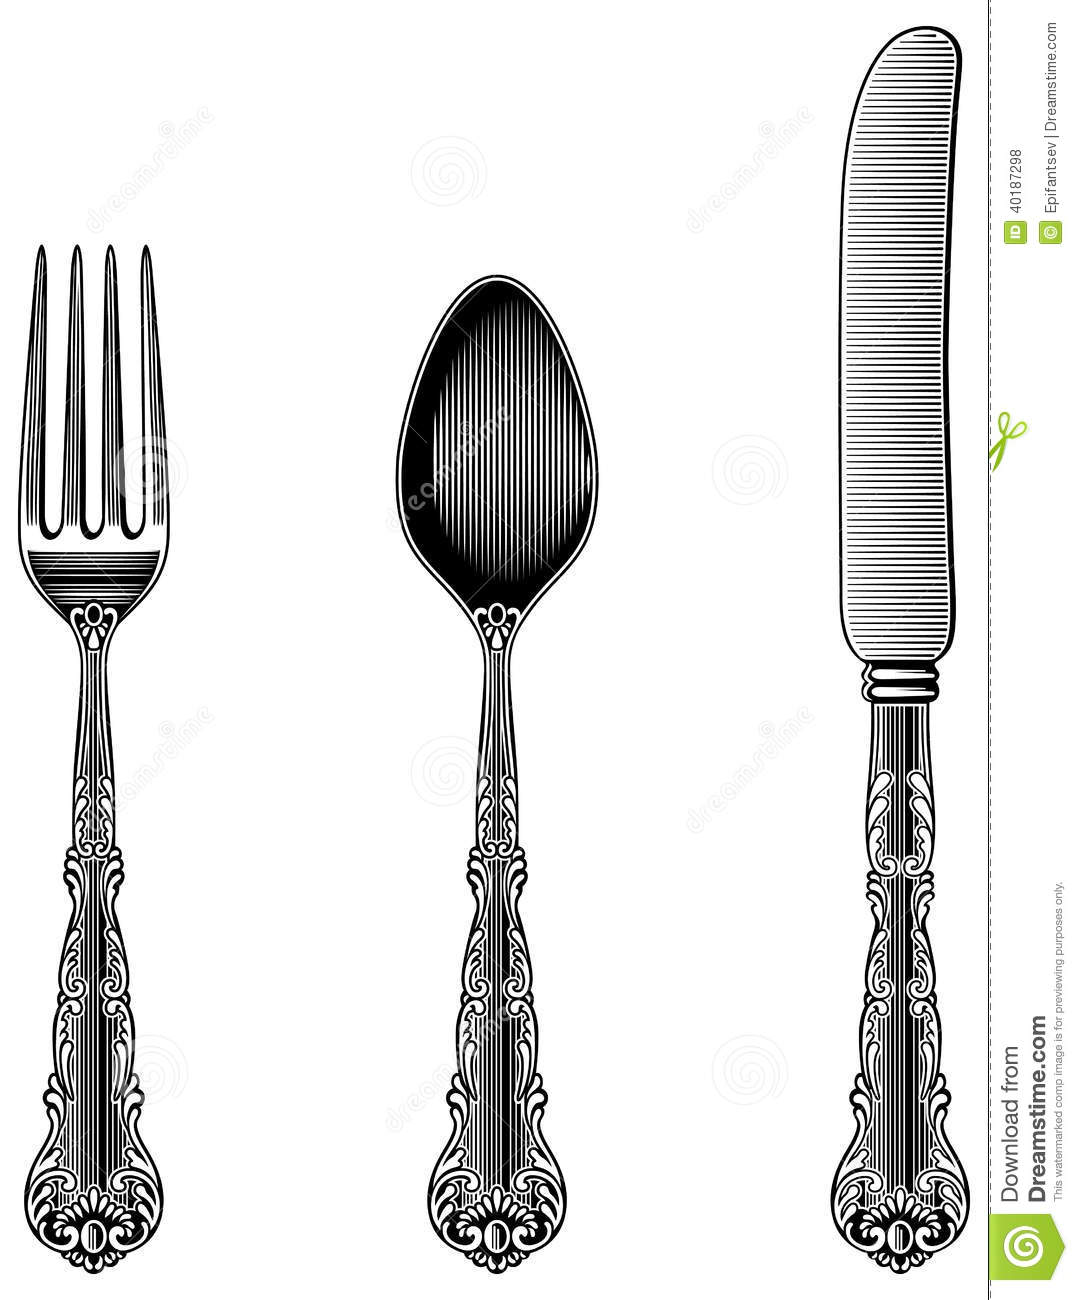 Images: Vintage Cutlery Clip Art.